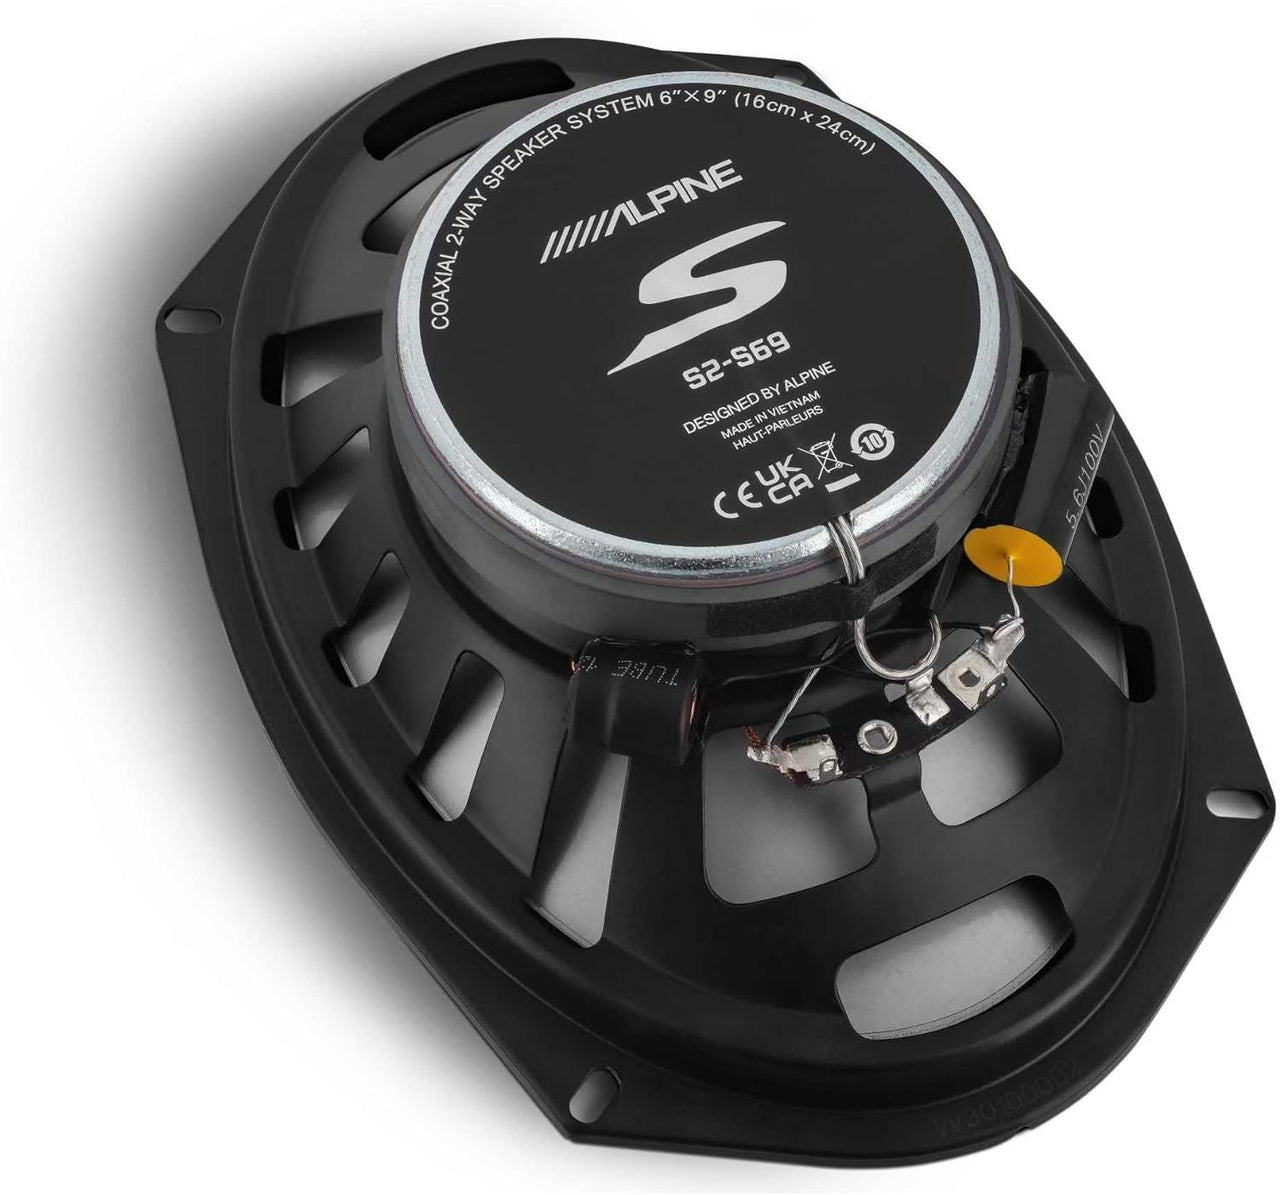 Alpine UTE-73BT In-Dash Digital Media Receiver Bluetooth & S2-S65C 6.5" Component & S2-S69 6x9" Speakers